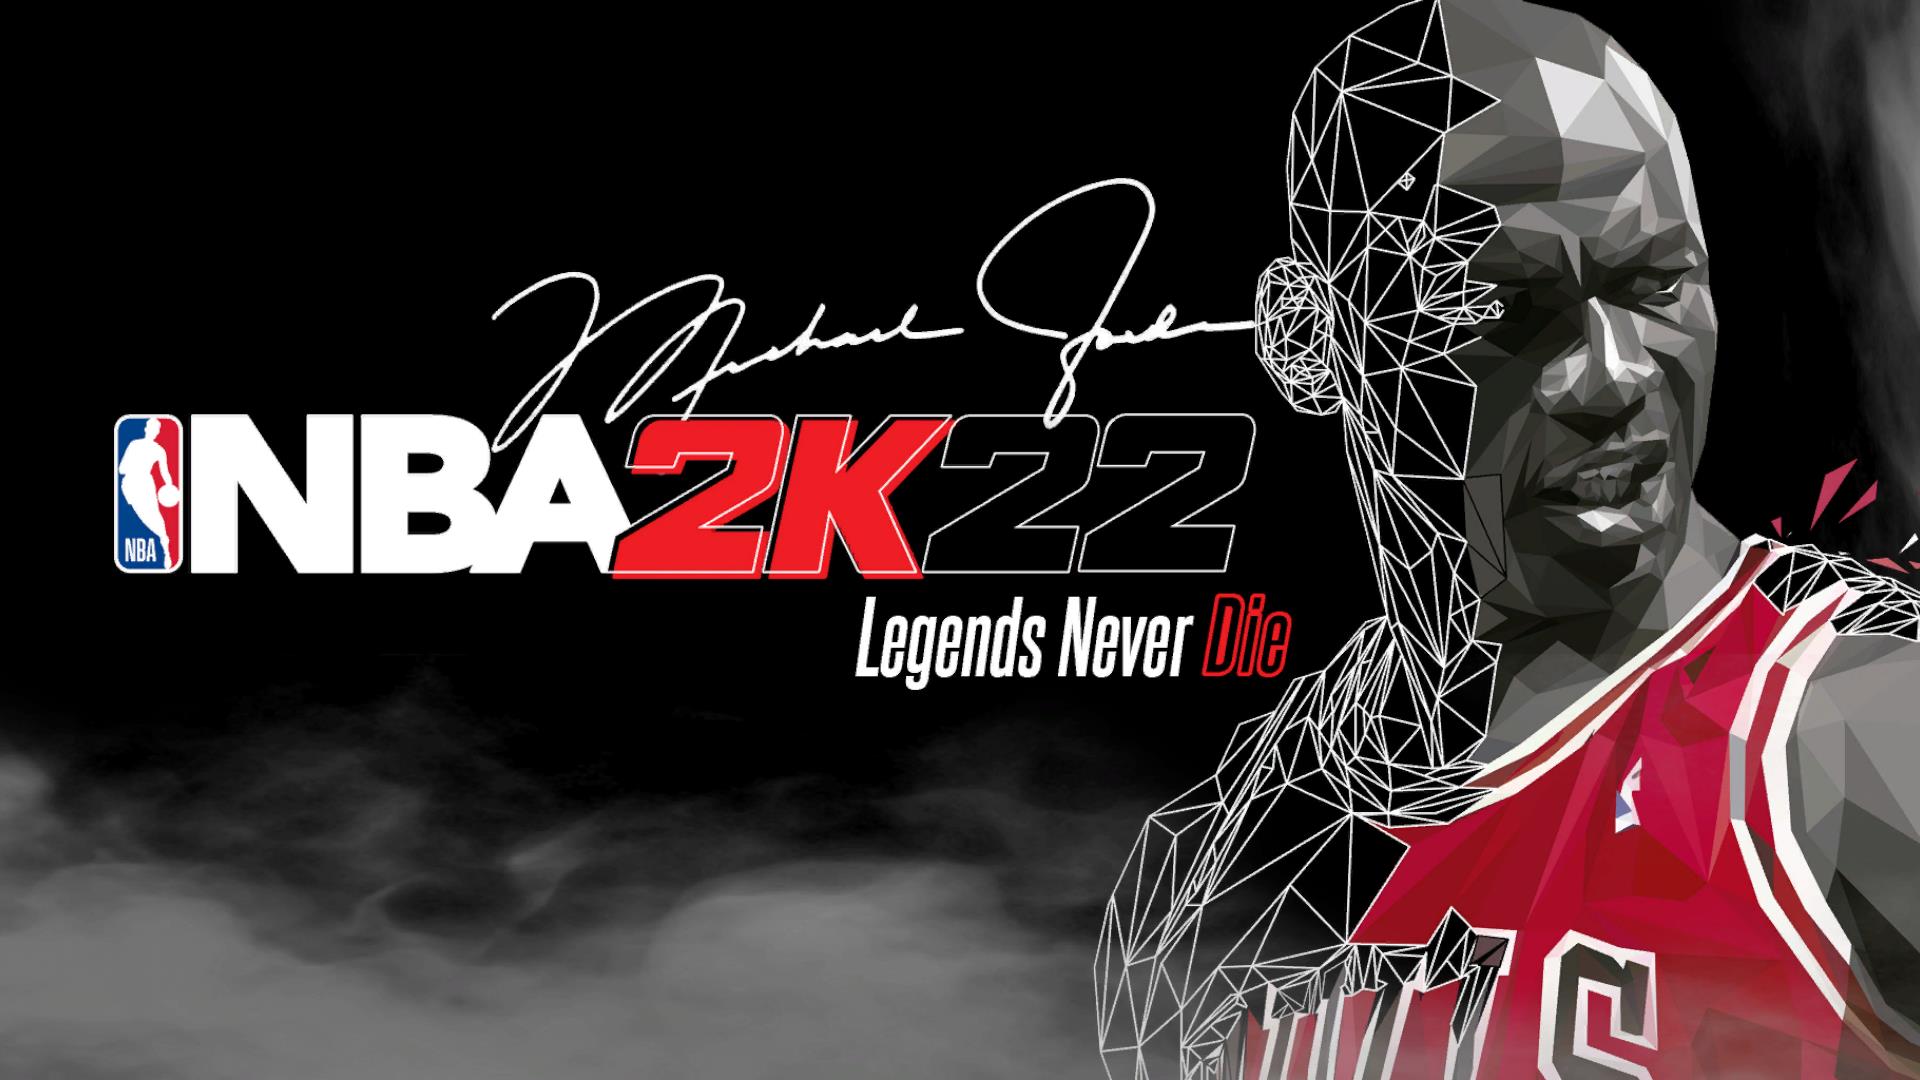 NBA 2K21 NBA 2K22 Legends Never Die Presentation by 2KGOD 2K Updates, Roster Update, Cyberface, Etc